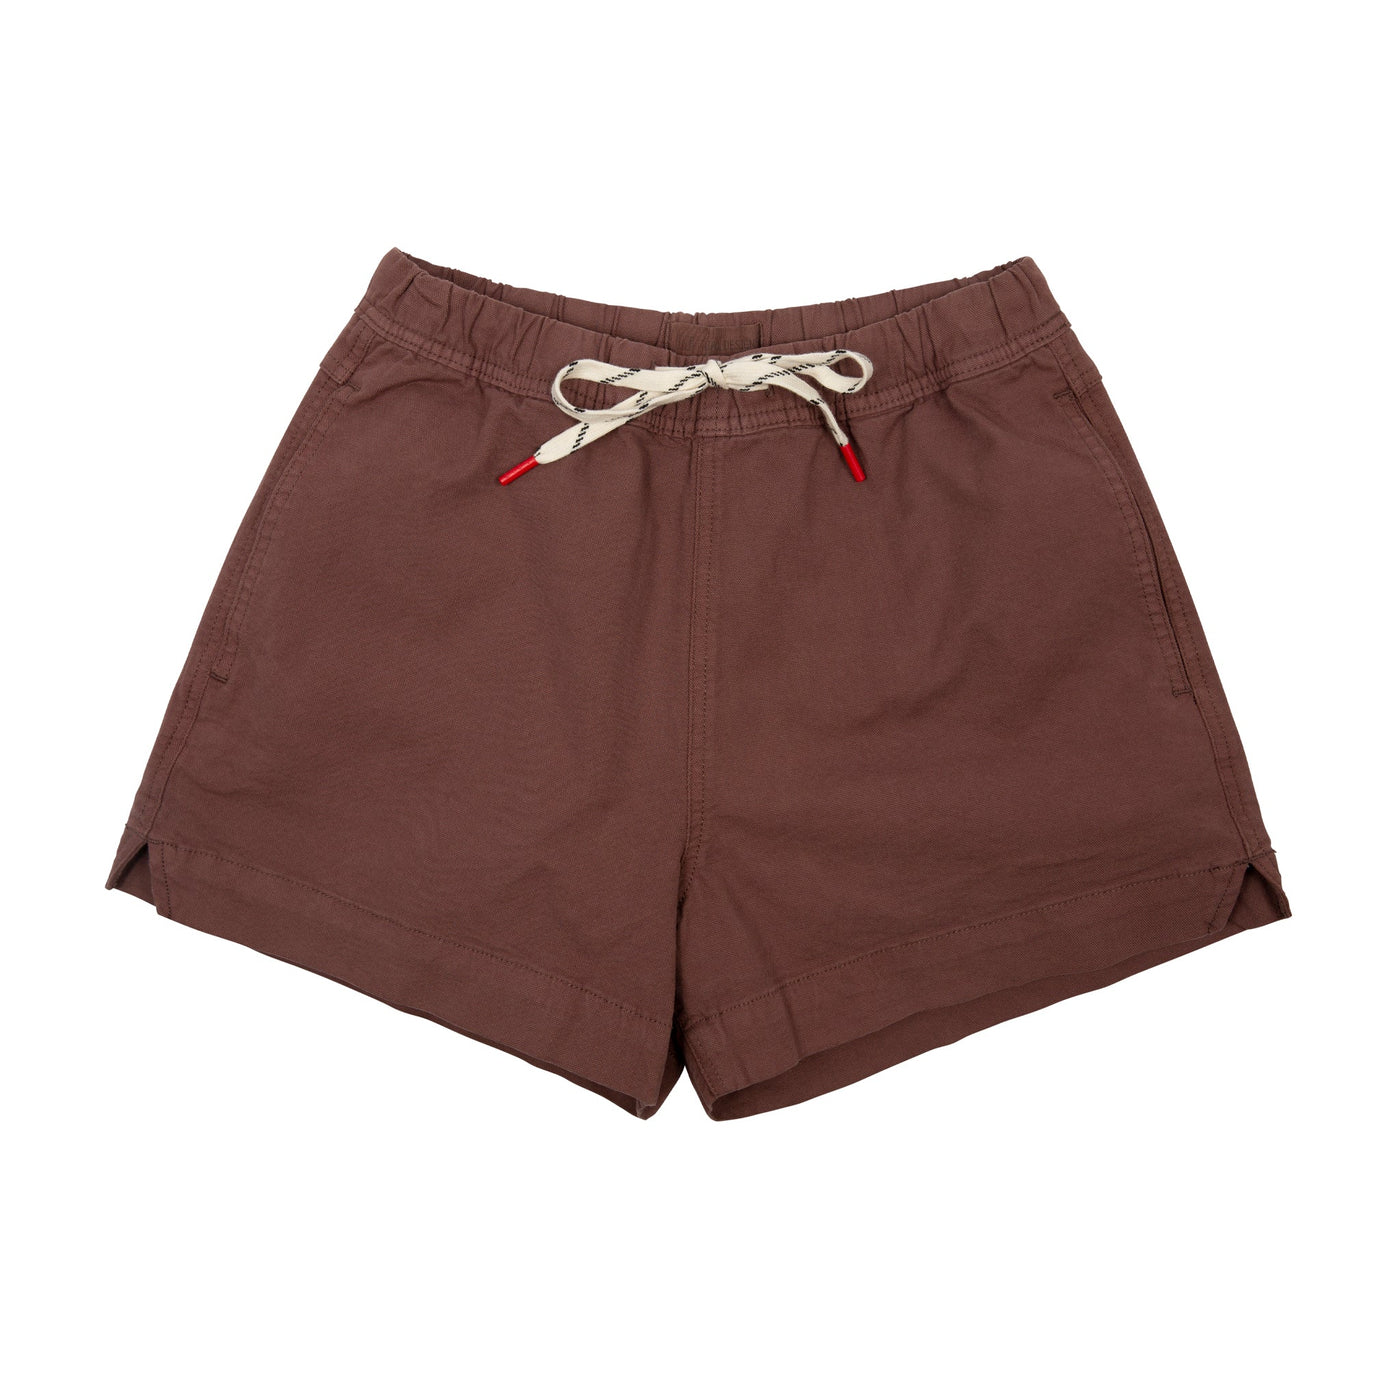 Topo Designs Women's Dirt Shorts in "Peppercorn" purplish brown.